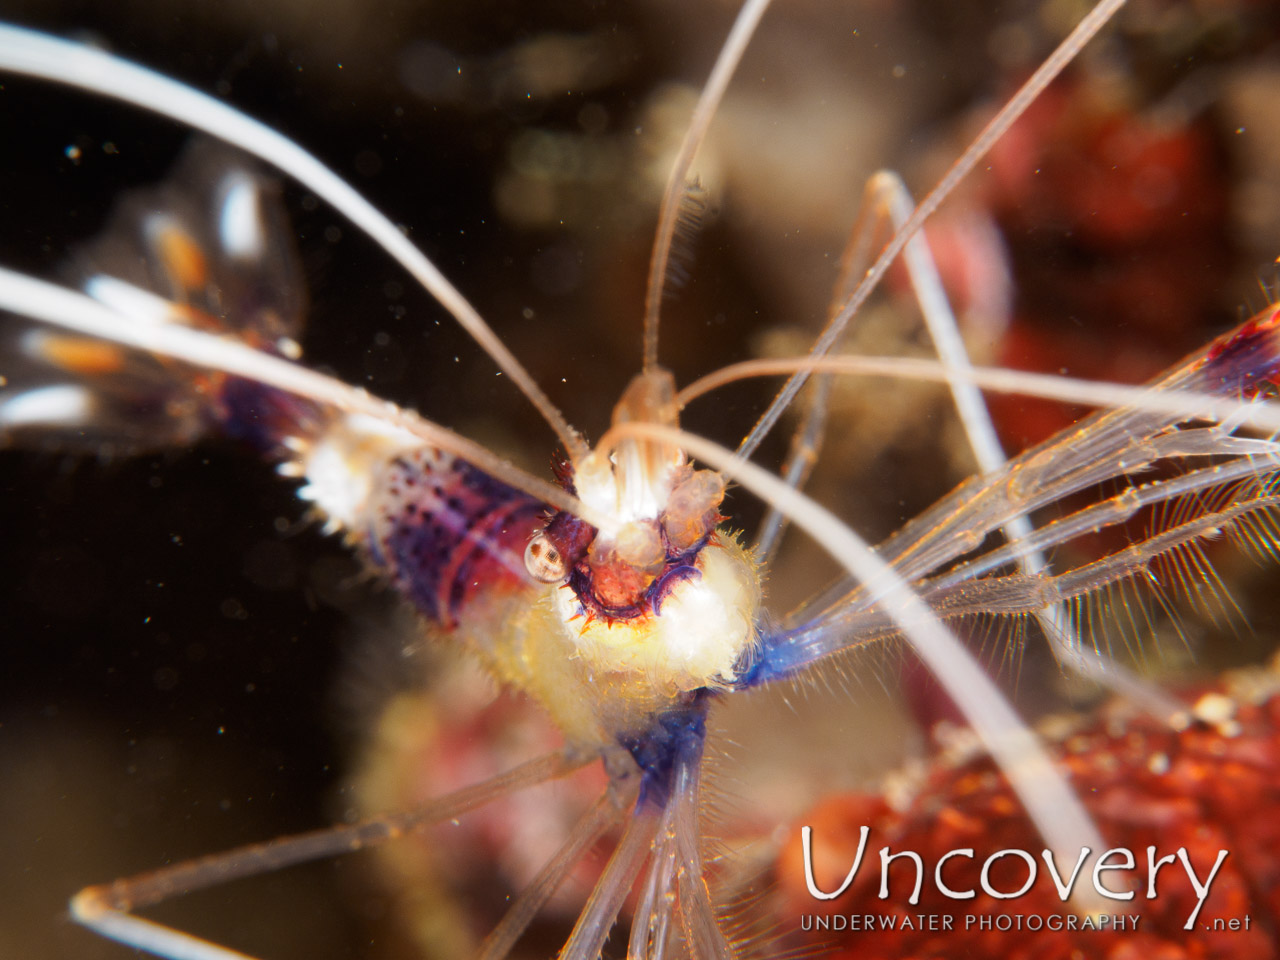 Banded Coral Shrimp (stenopus Hispidus), photo taken in Philippines, Batangas, Anilao, Balanoy